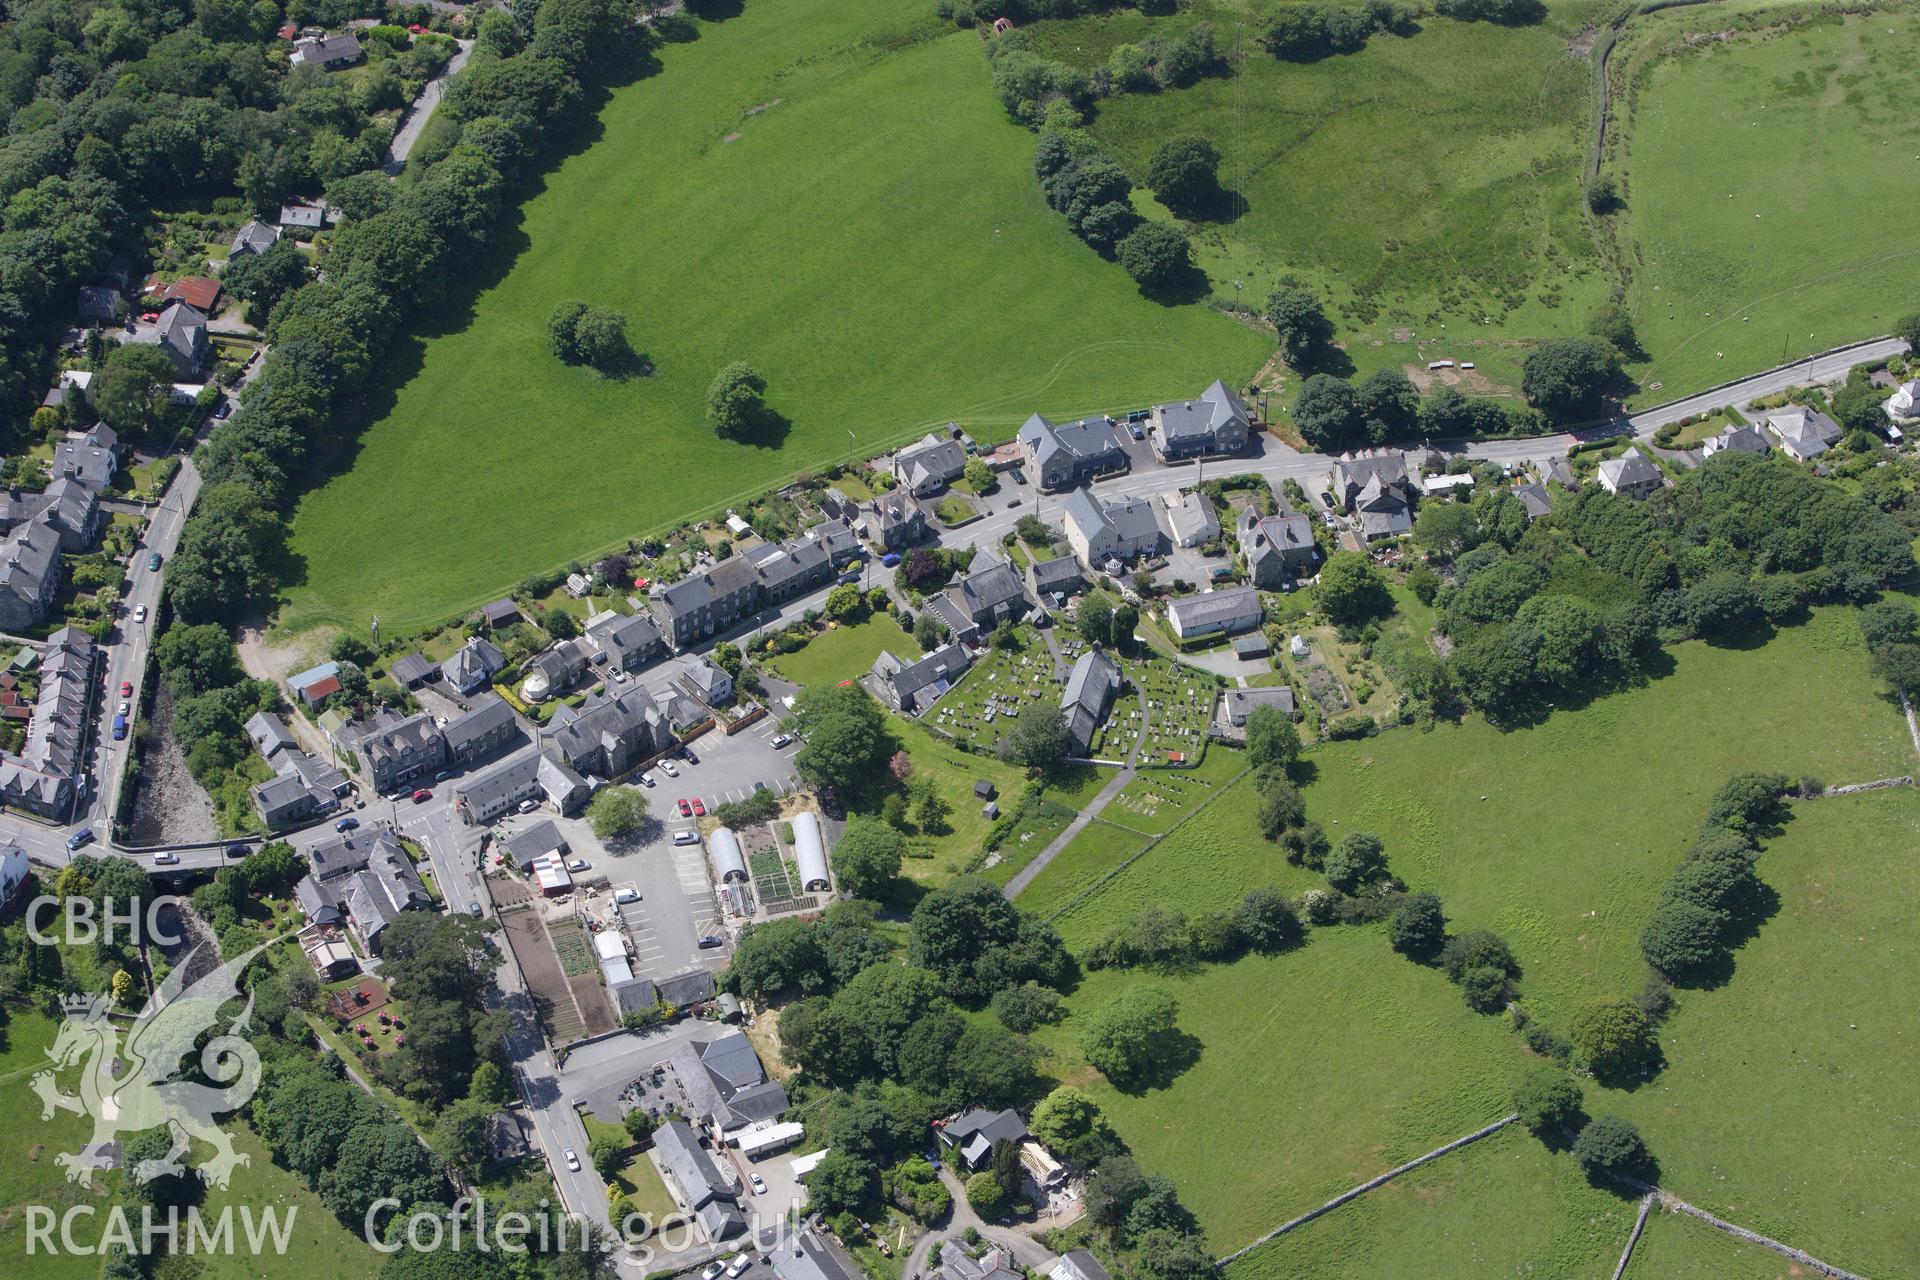 RCAHMW colour oblique aerial photograph of Llanbedr village. Taken on 16 June 2009 by Toby Driver